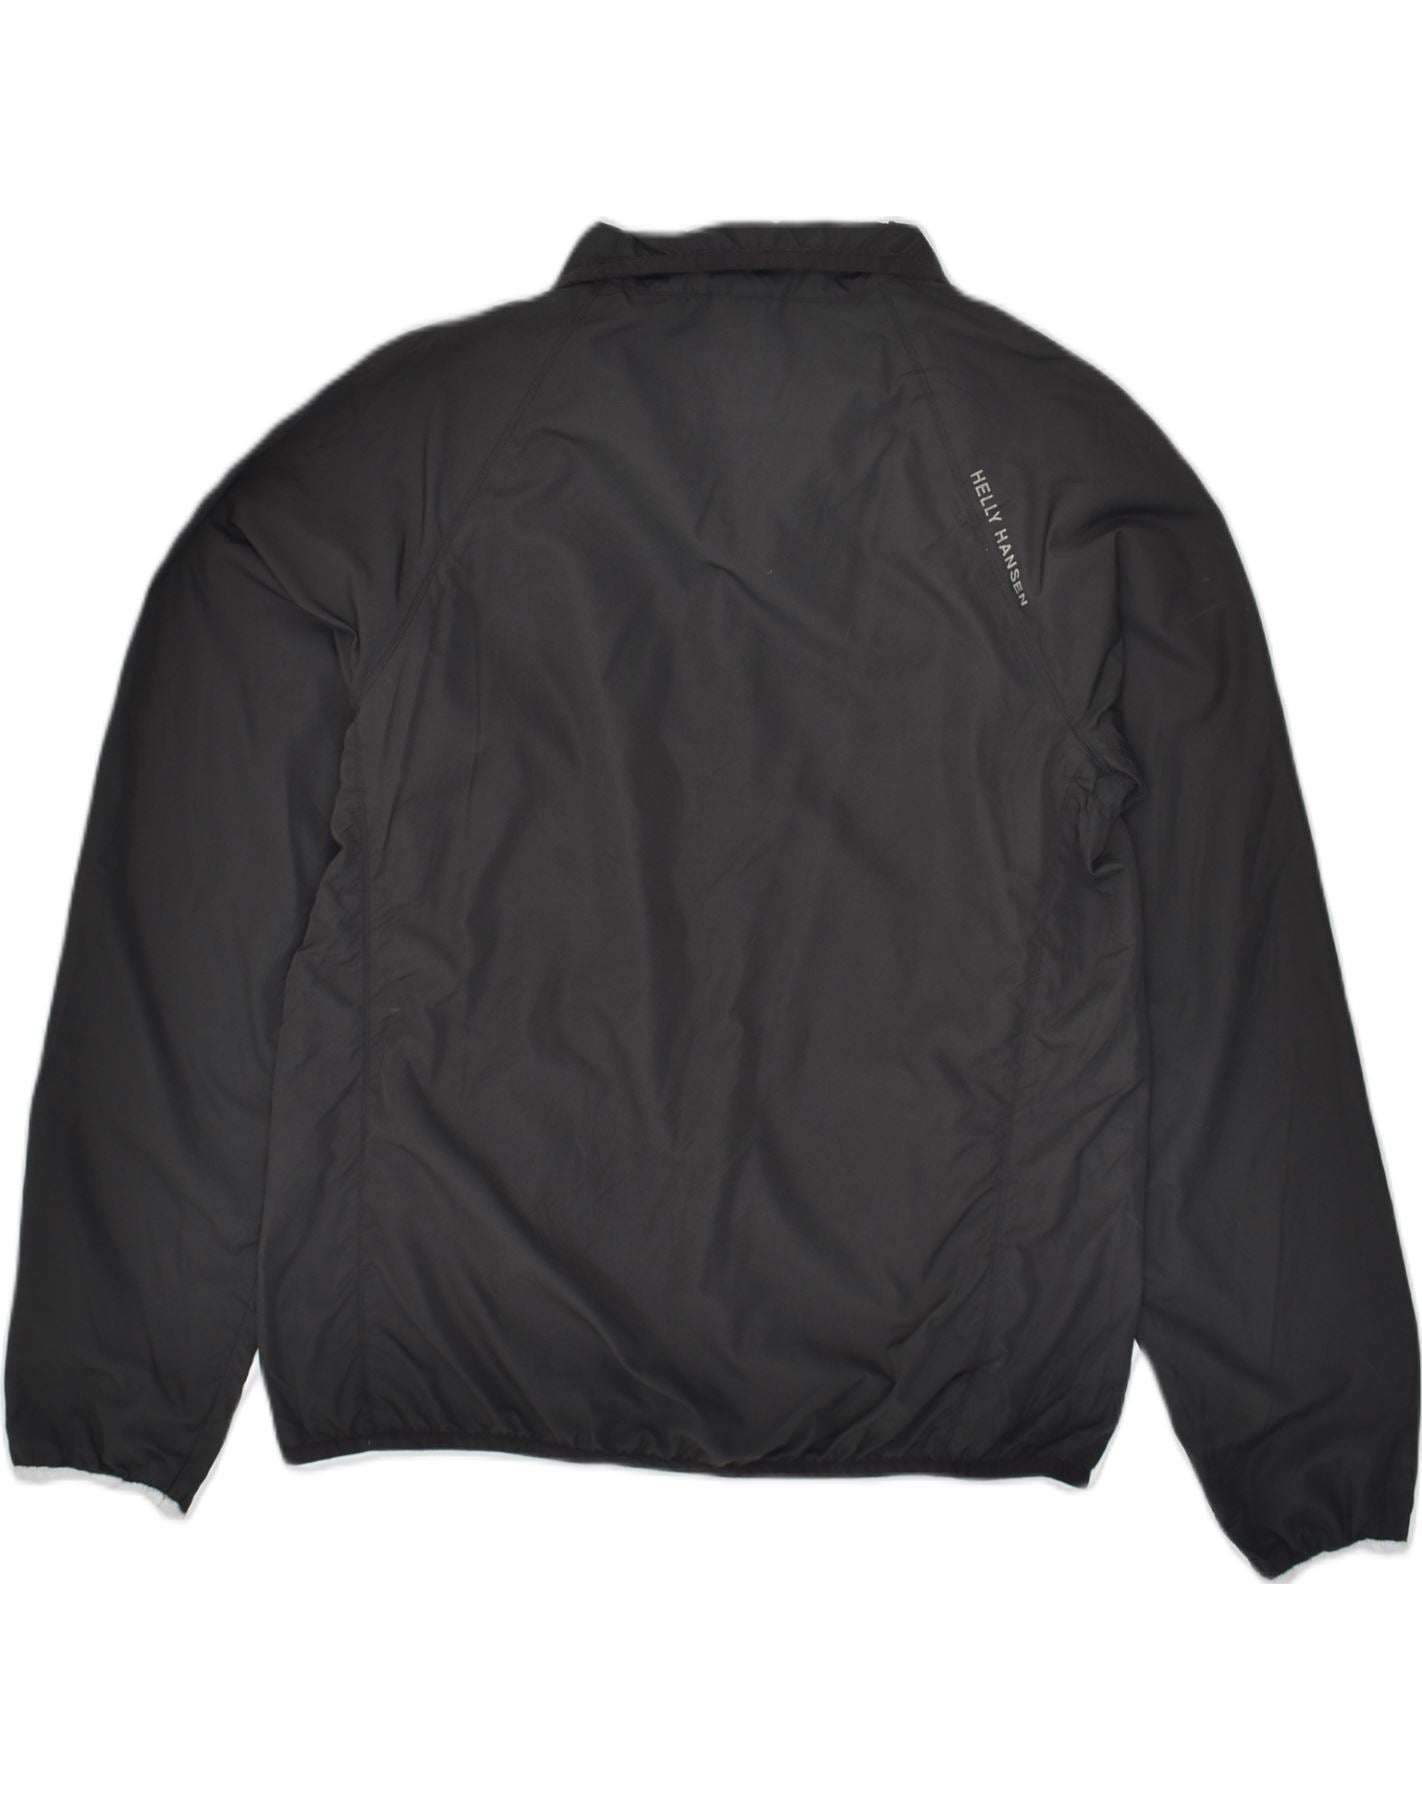 HELLY HANSEN Womens Tracksuit Top Jacket UK 14 Medium Black Polyester, Vintage & Second-Hand Clothing Online